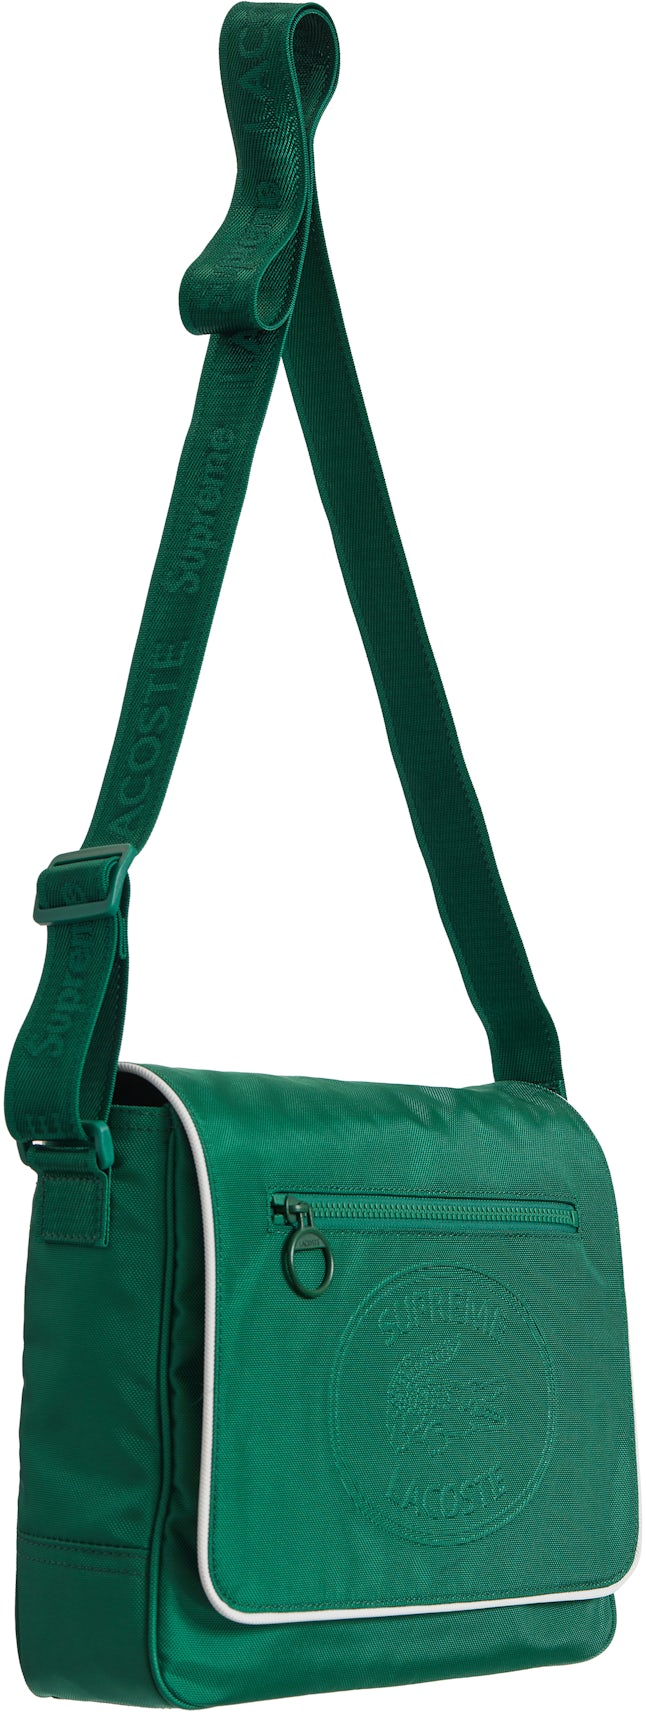 Supreme X Lacoste Small Messenger Bag - Green